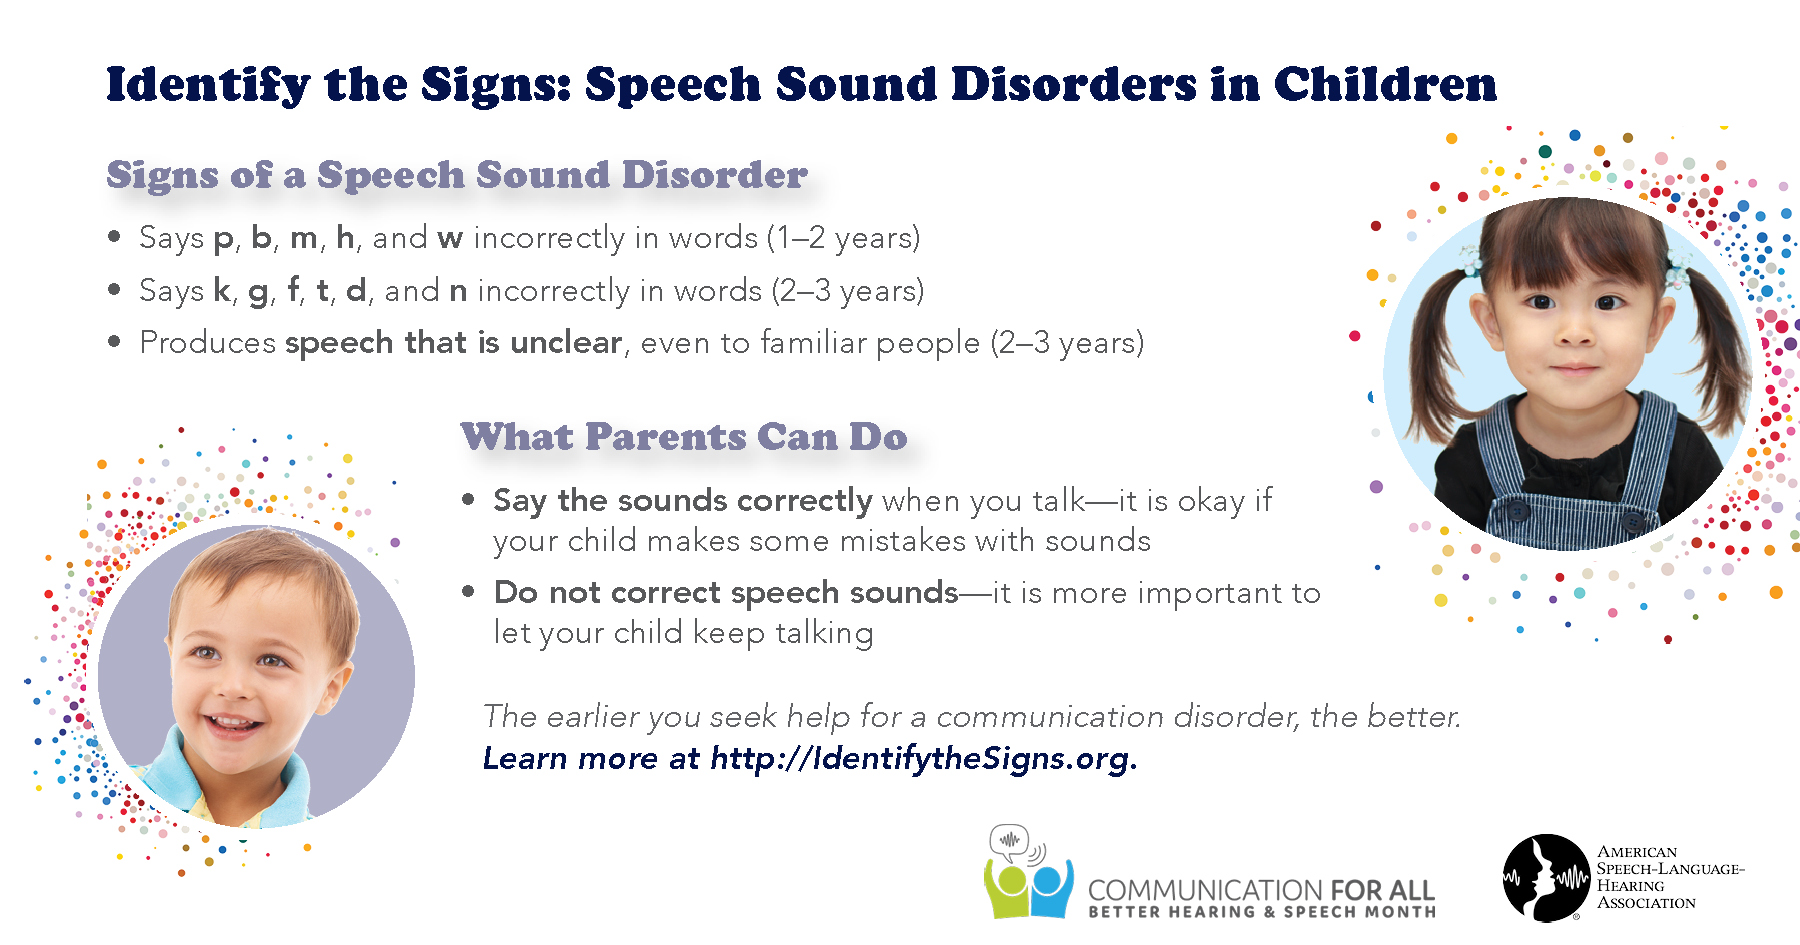 Signs of Speech Sound Disorders in Children